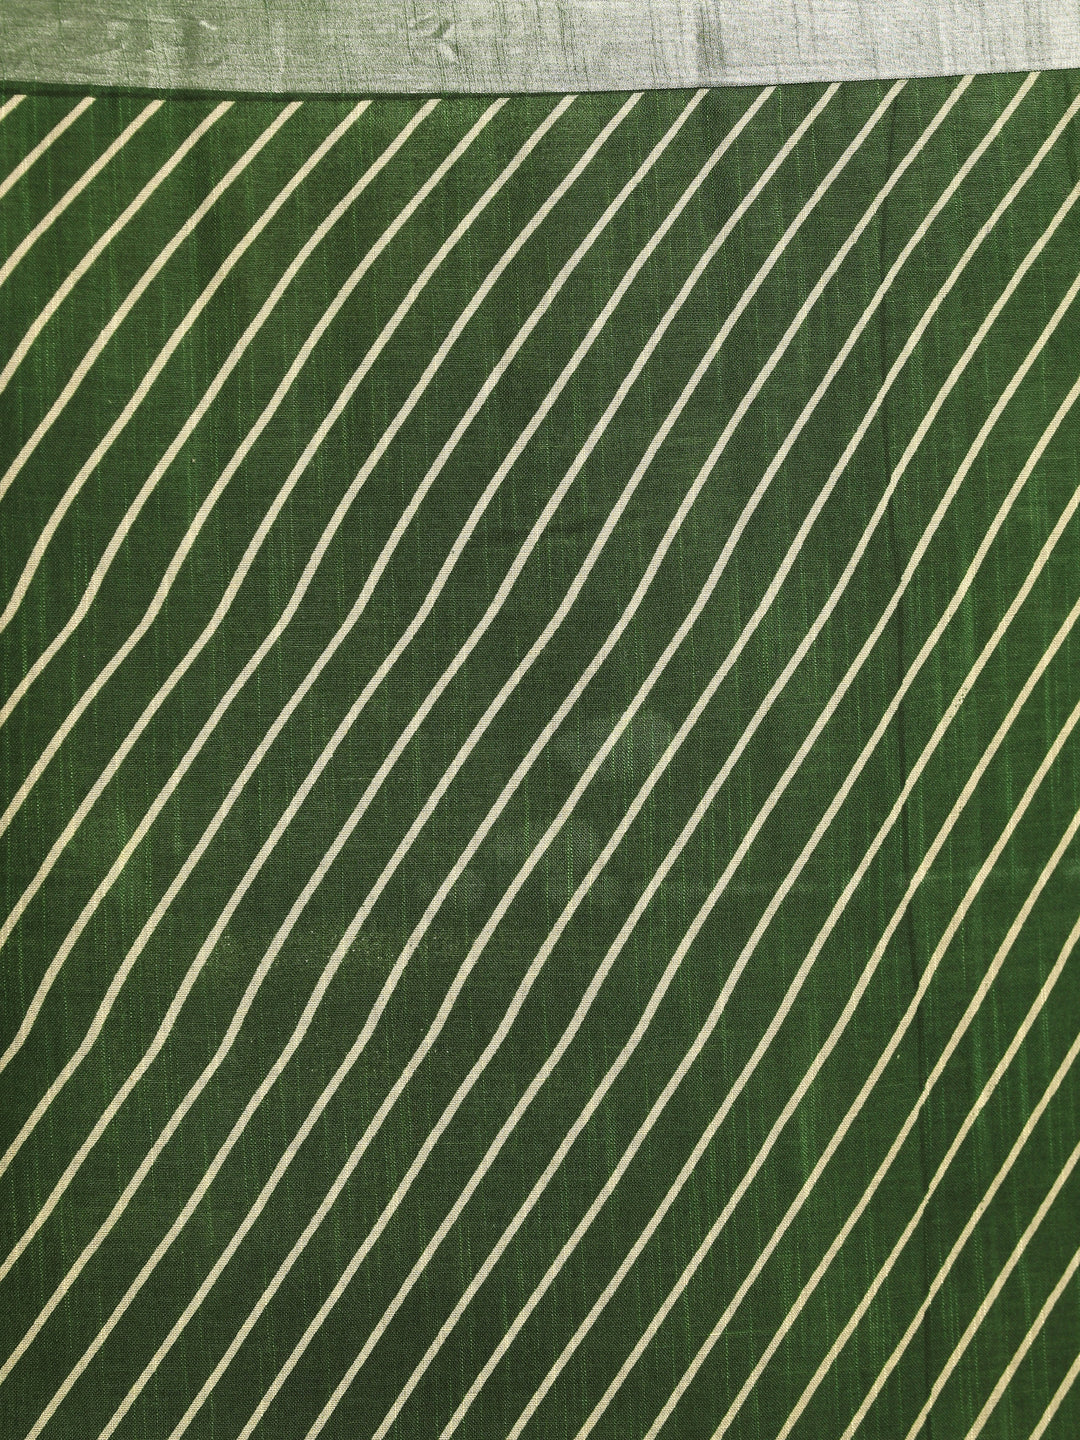 Indethnic Green Liva Printed Saree - View 3